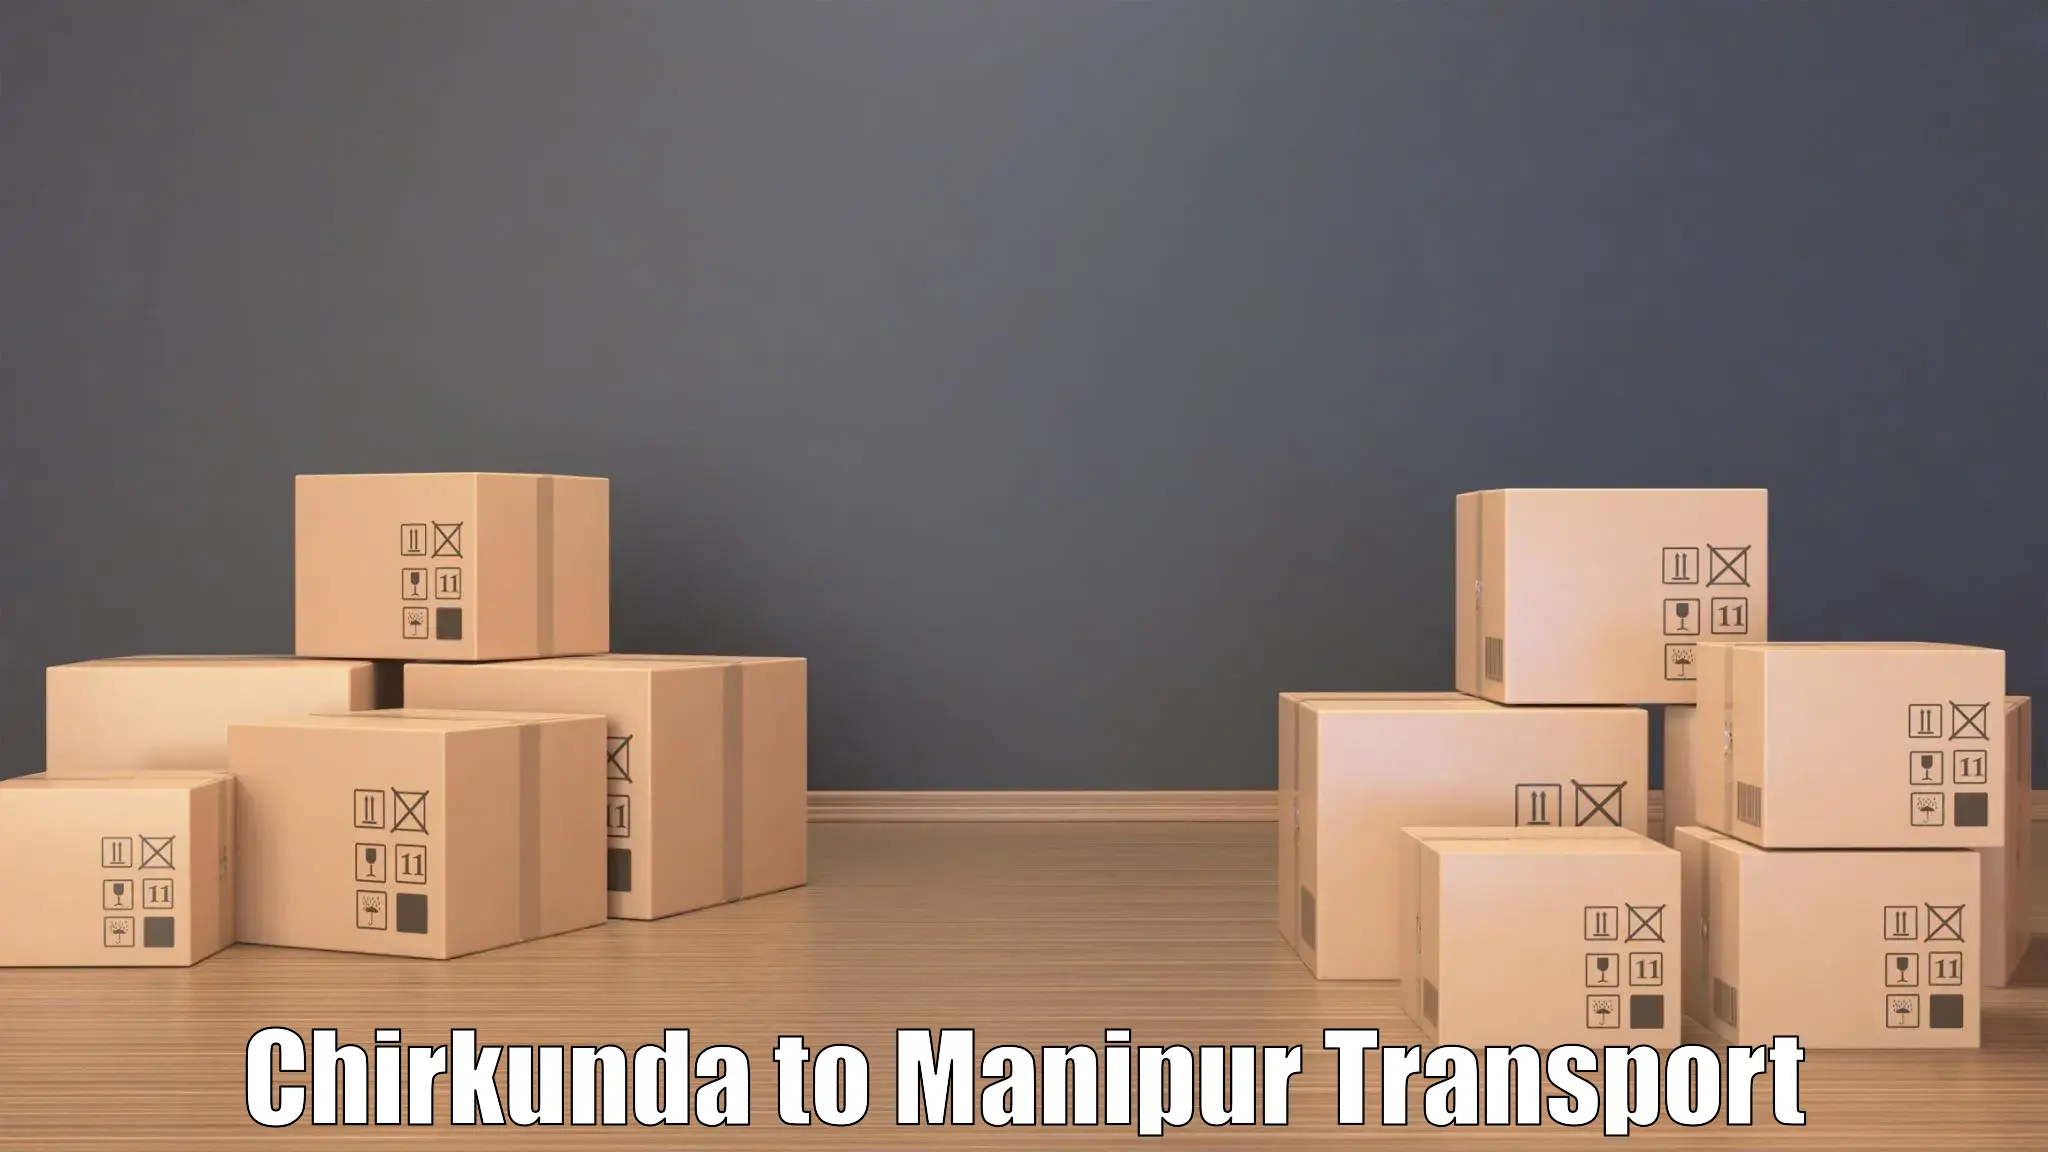 Truck transport companies in India Chirkunda to Chandel